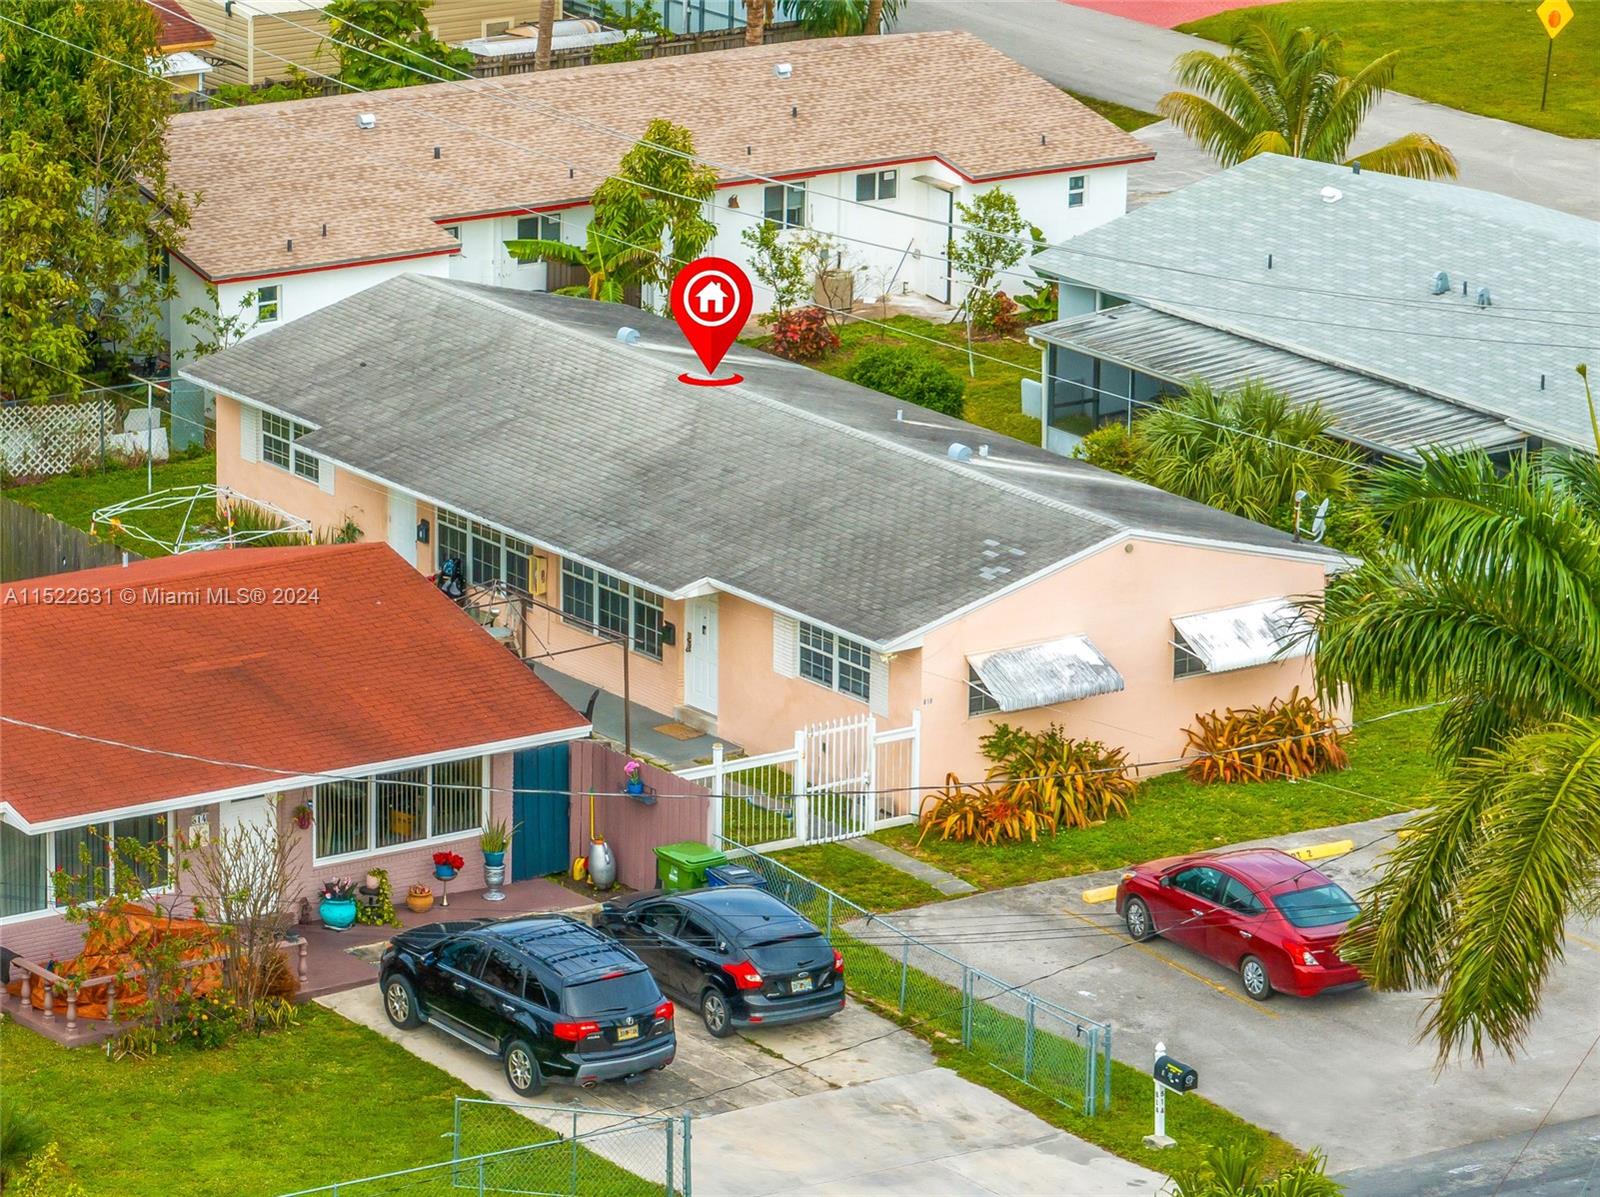 Rental Property at 810 Sw 5th Ave, Hallandale Beach, Broward County, Florida -  - $599,000 MO.